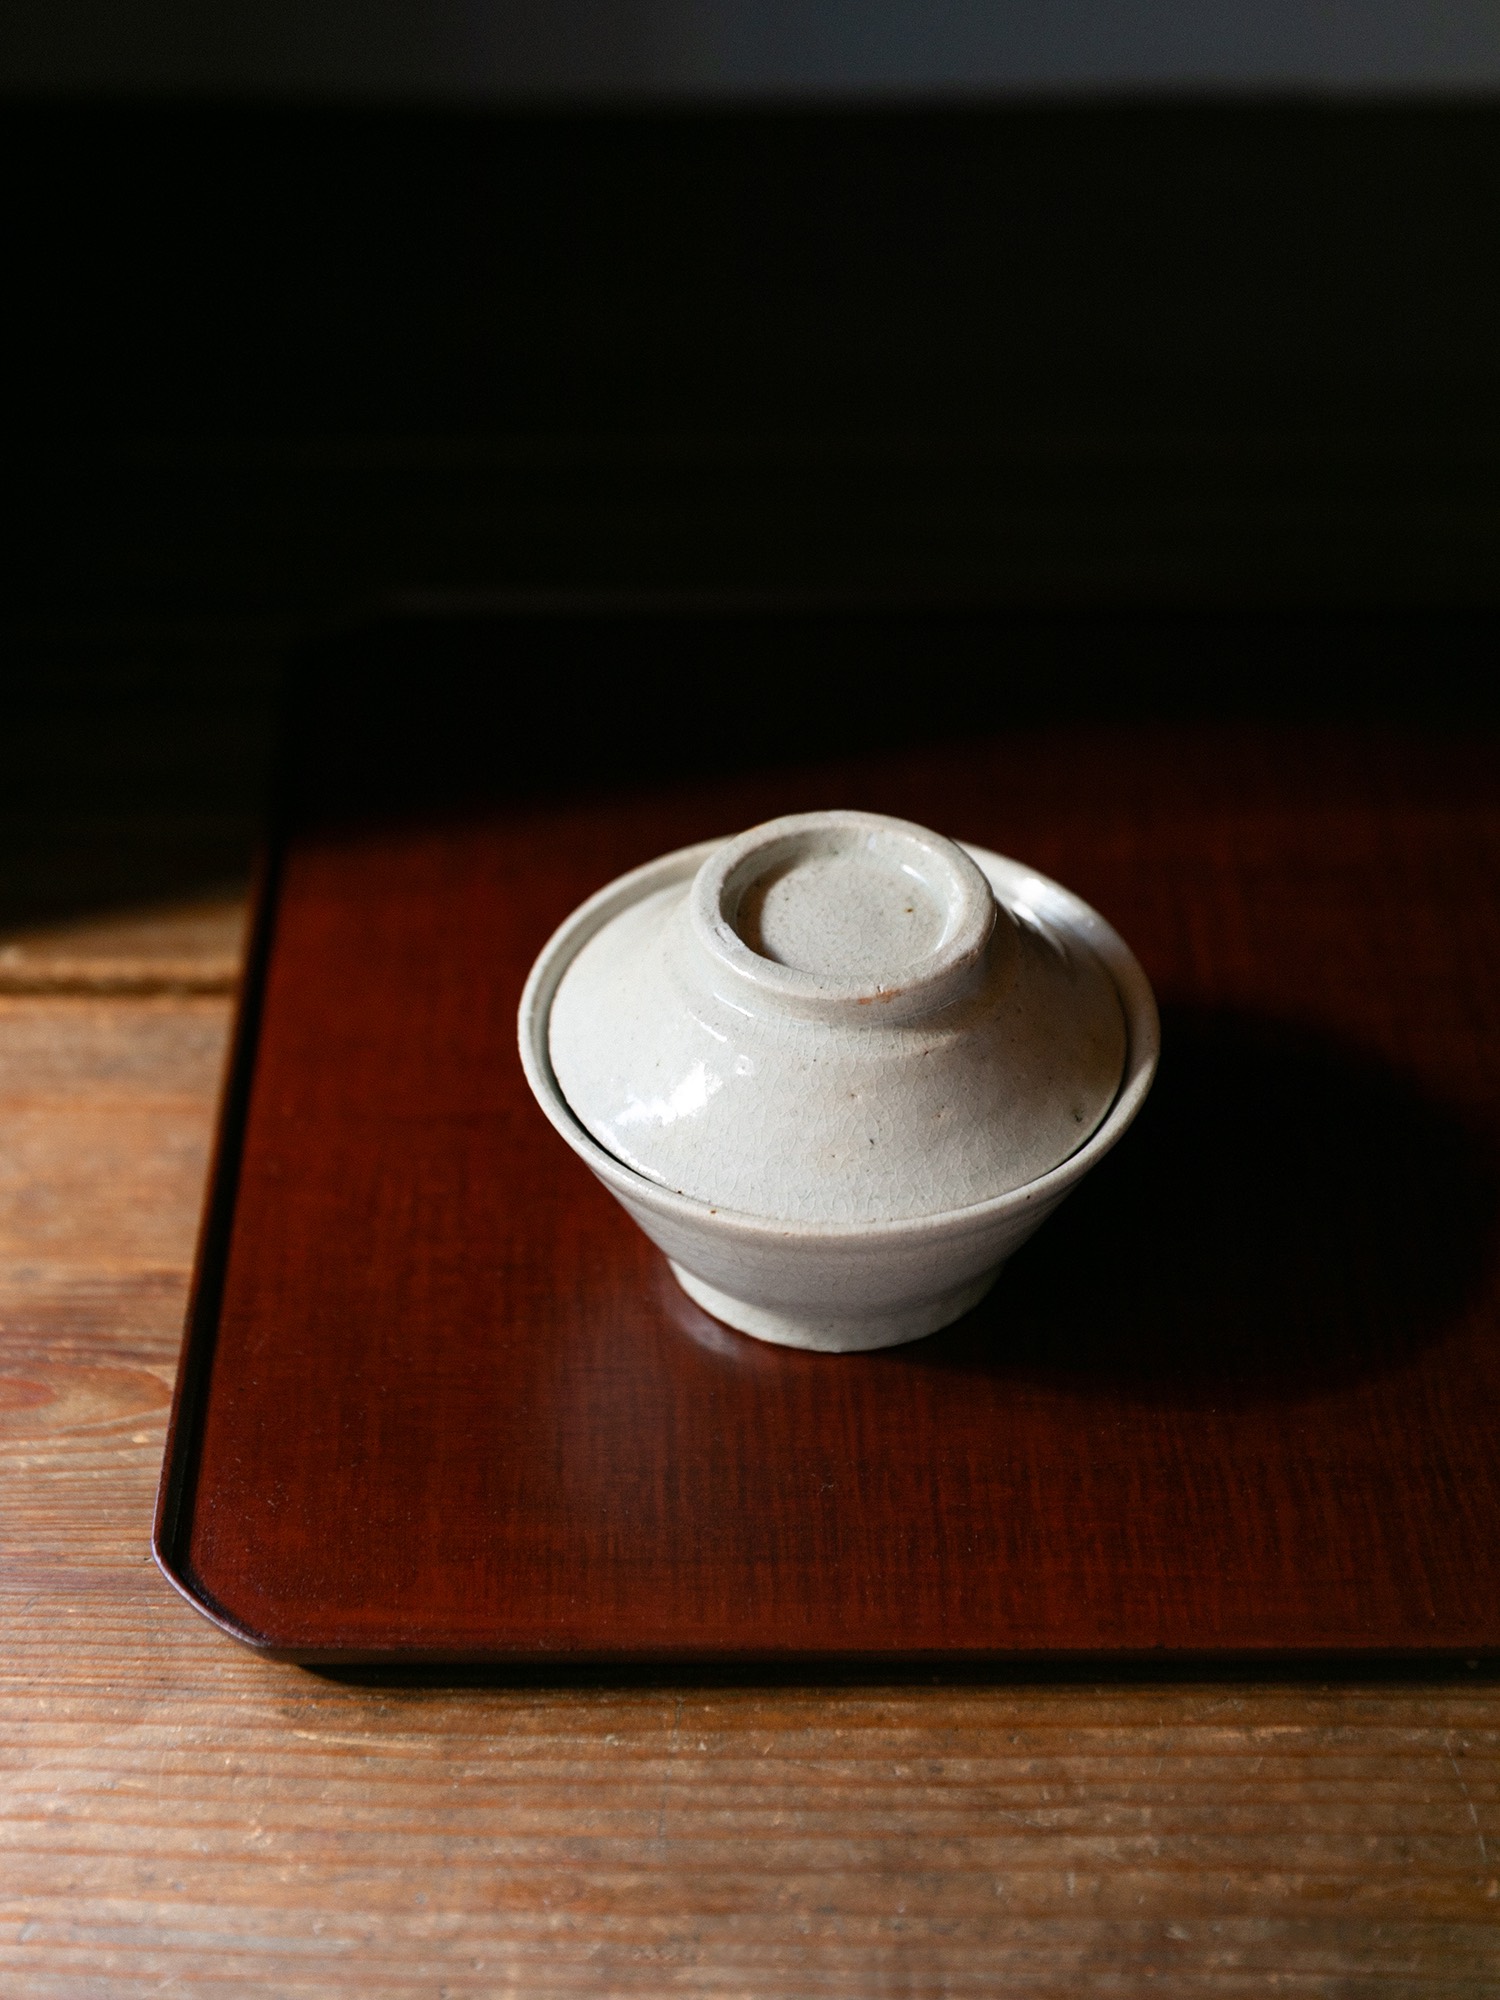 <a href="https://catalog.natsutsubaki.com/category/ceramic/hayashi_t/" target="_blank" rel="noopener">林拓児さんの貫入蓋付碗です。ご飯を盛り付け、蓋にはお新香を。想像が膨らむうつわです。</a>